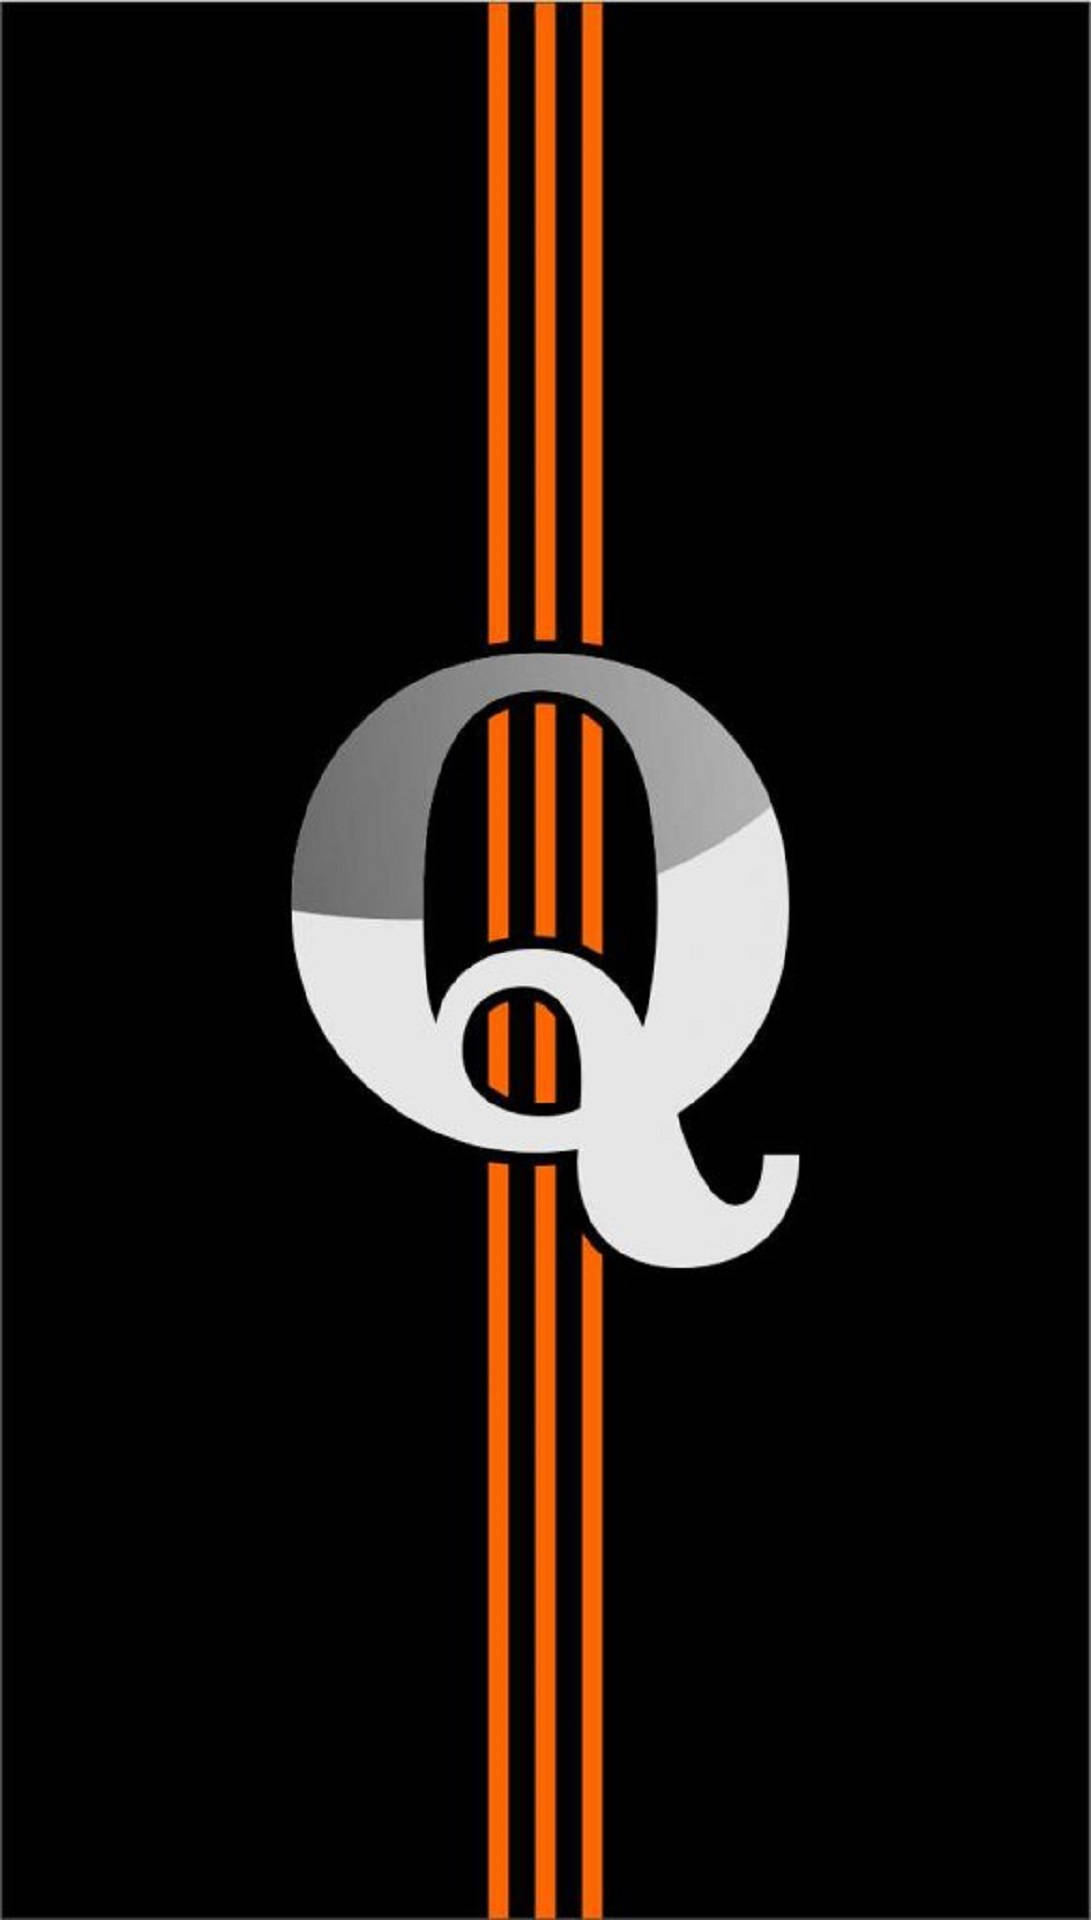 Letter Q With Orange Lines Wallpaper